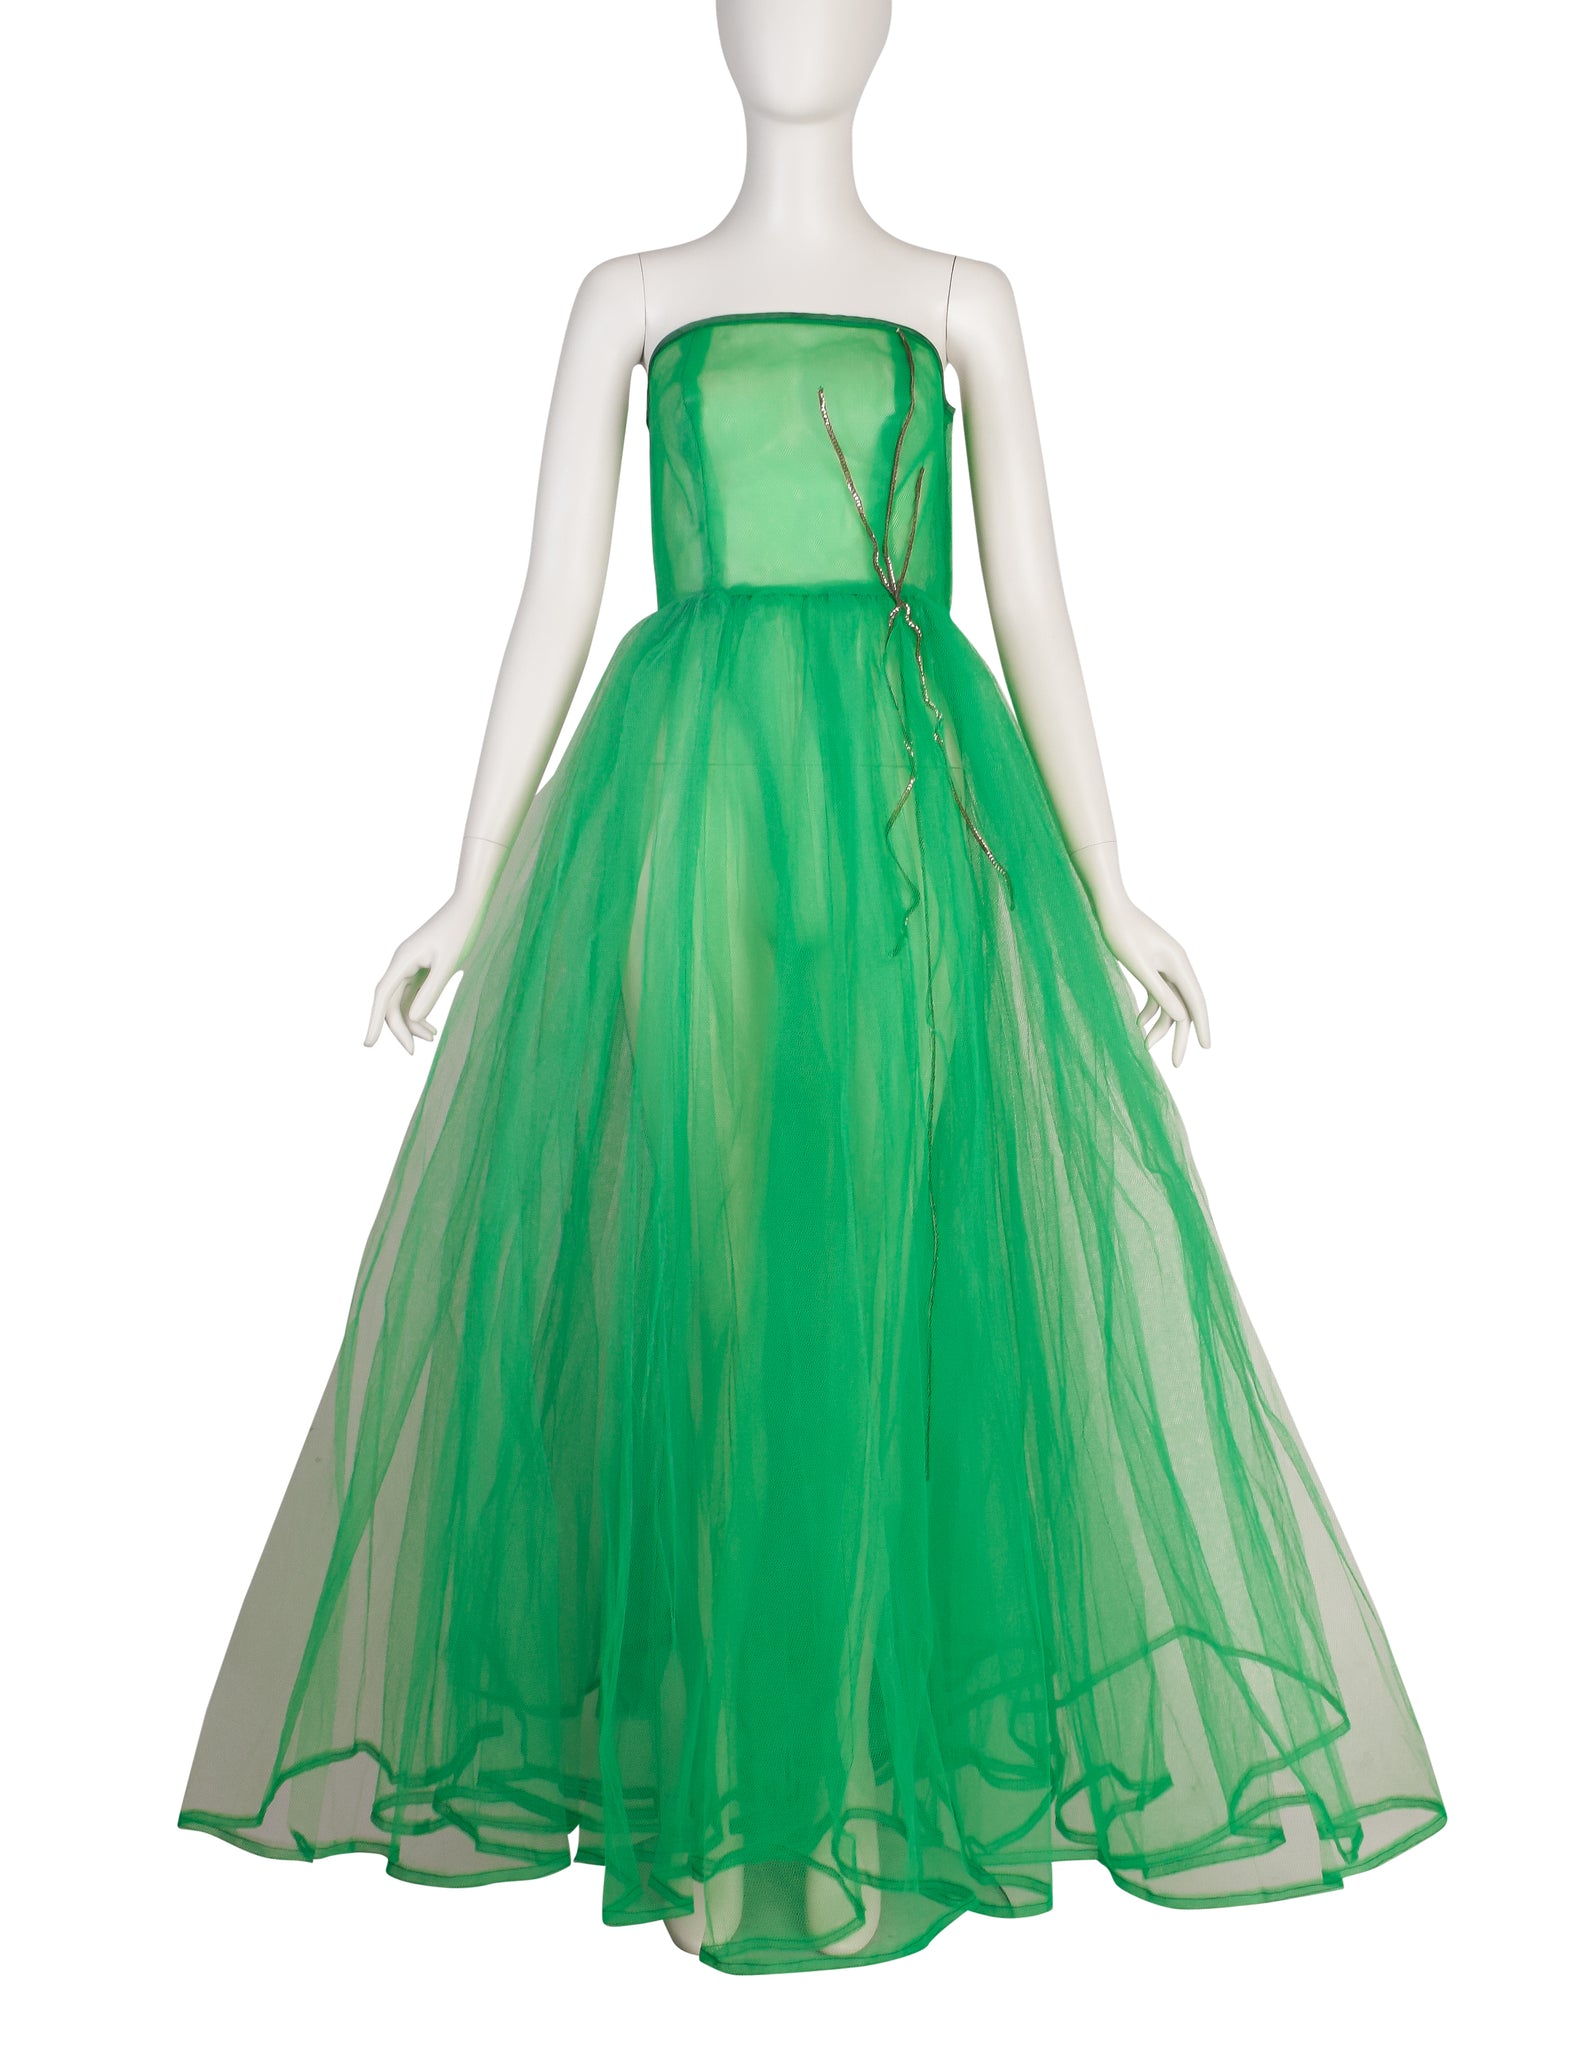 1950s Vintage Green Sheer Tulle Full Circle Skirt Princess Party Dress